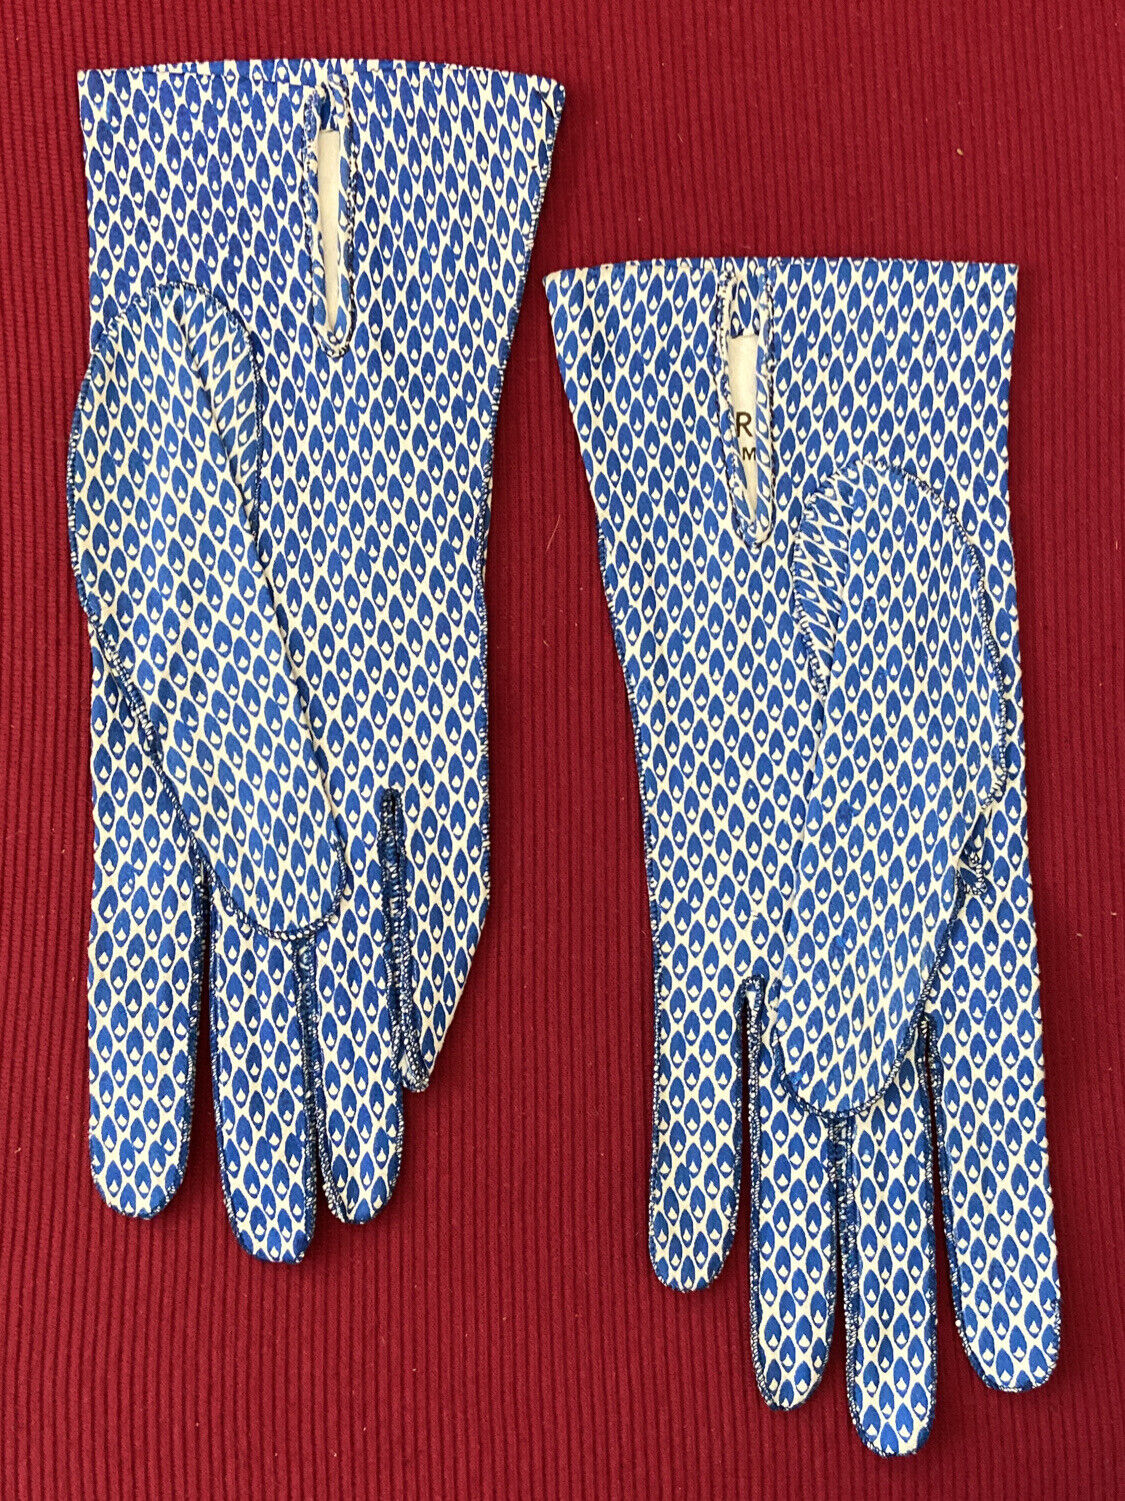 Vintage Trussardi gloves